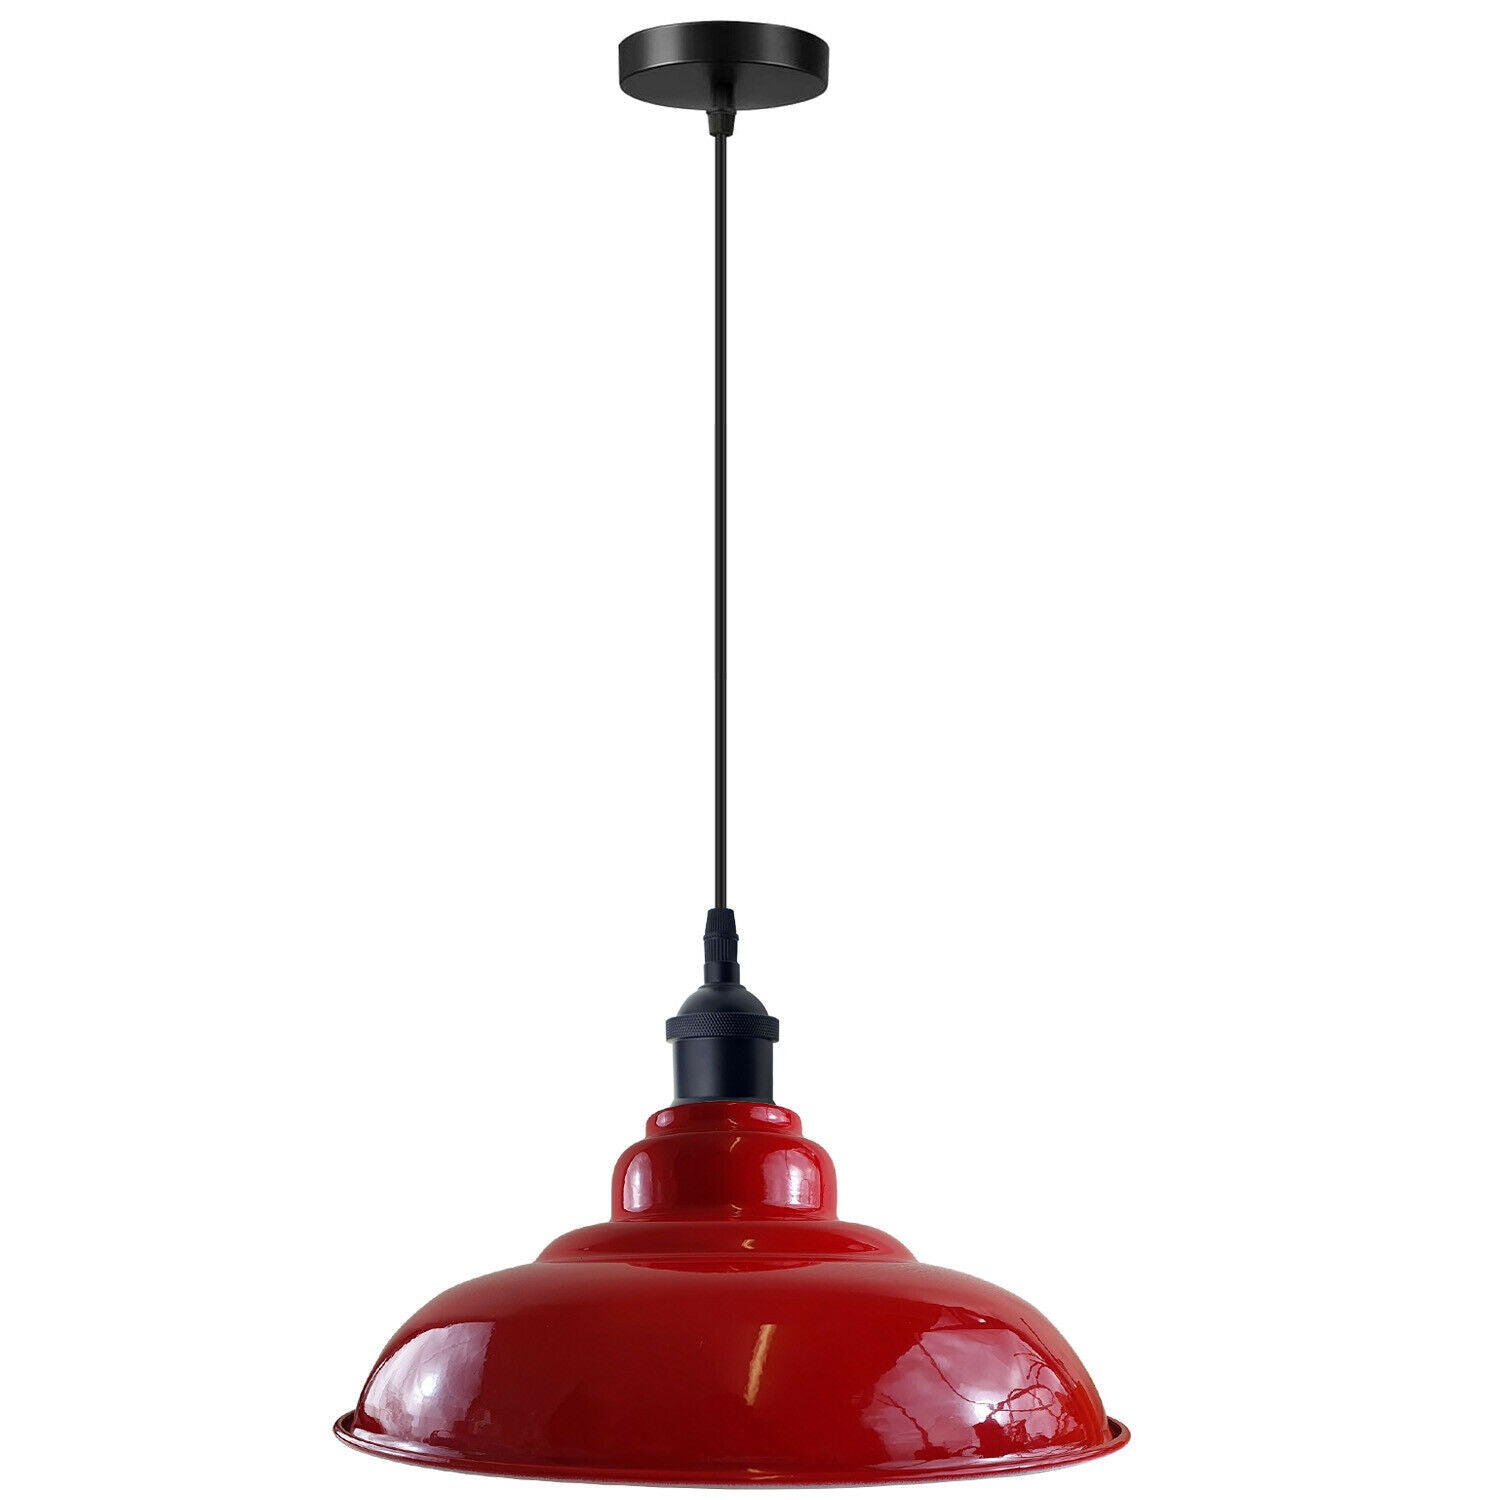 LEDSone industrial Vintage  32cm  Red Pendant Retro Metal Lamp Shade E27 Uk Holder~3684 - LEDSone UK Ltd